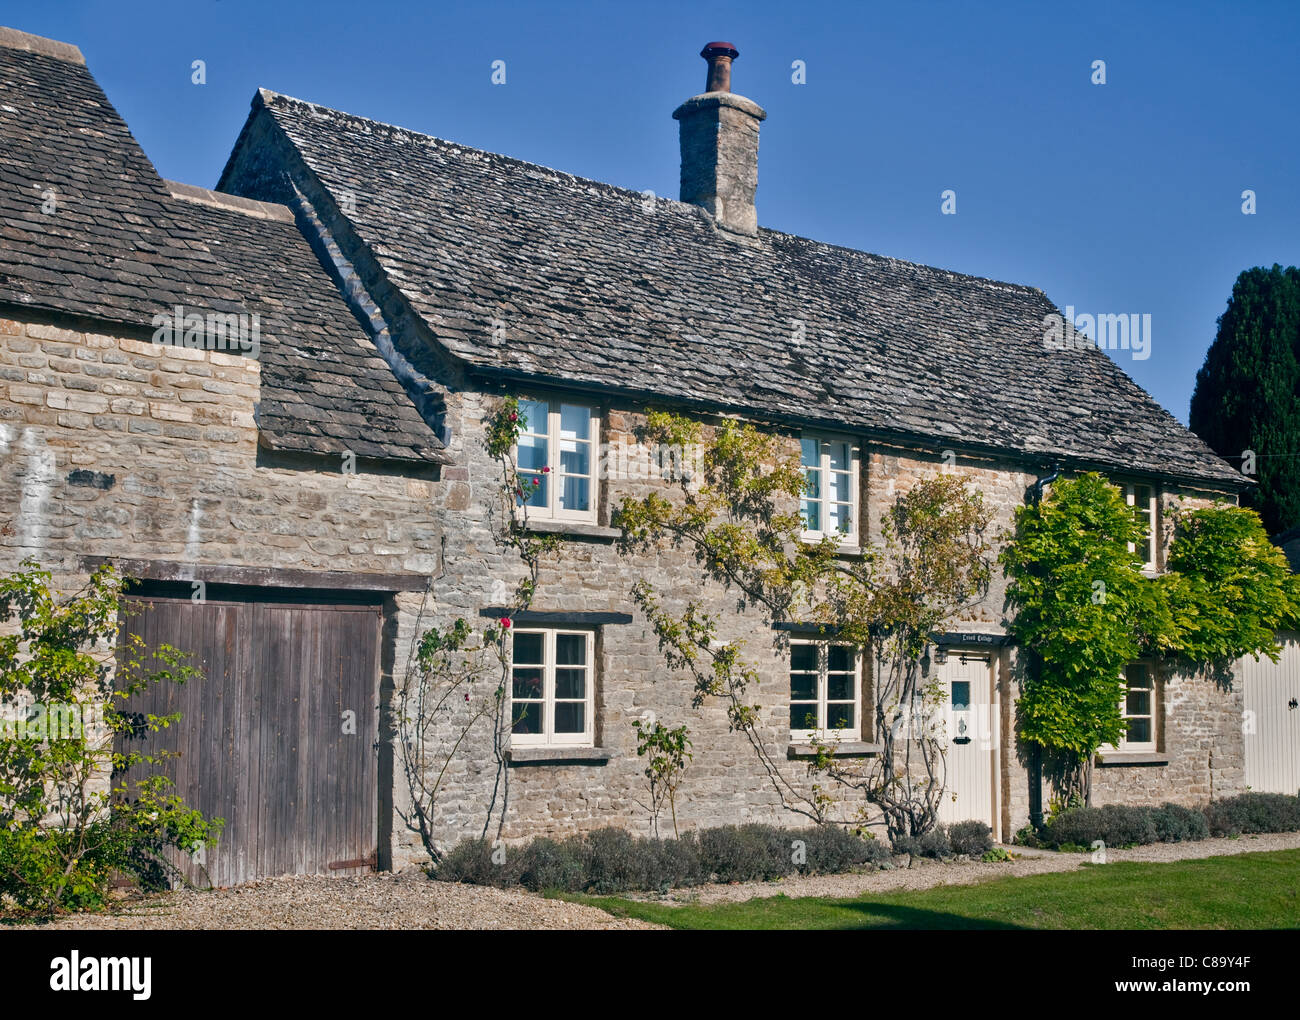 Ferienhaus, Minster Lovell, Oxfordshire, England Stockfoto